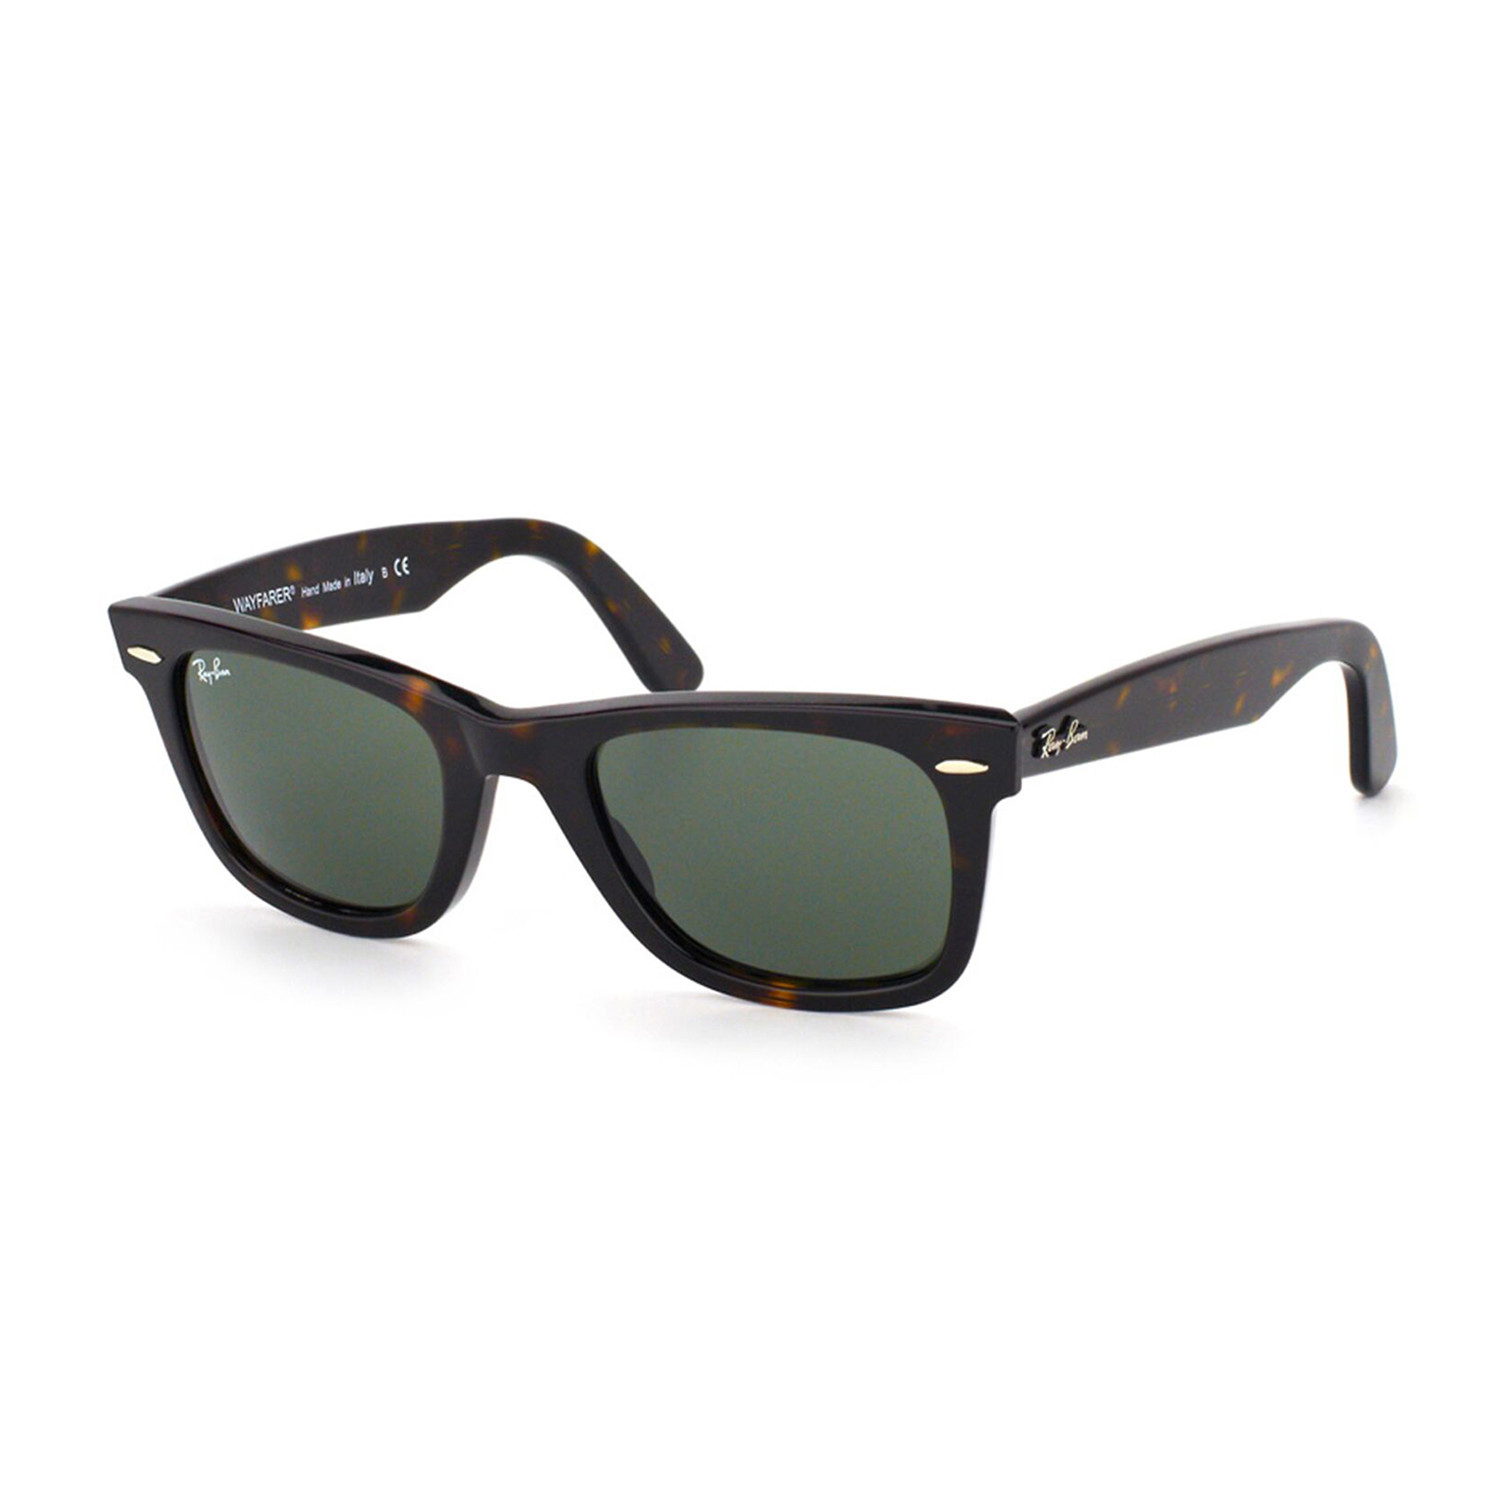 Ray Ban Original Wayfarer Sunglasses Tortoise Green Luxury